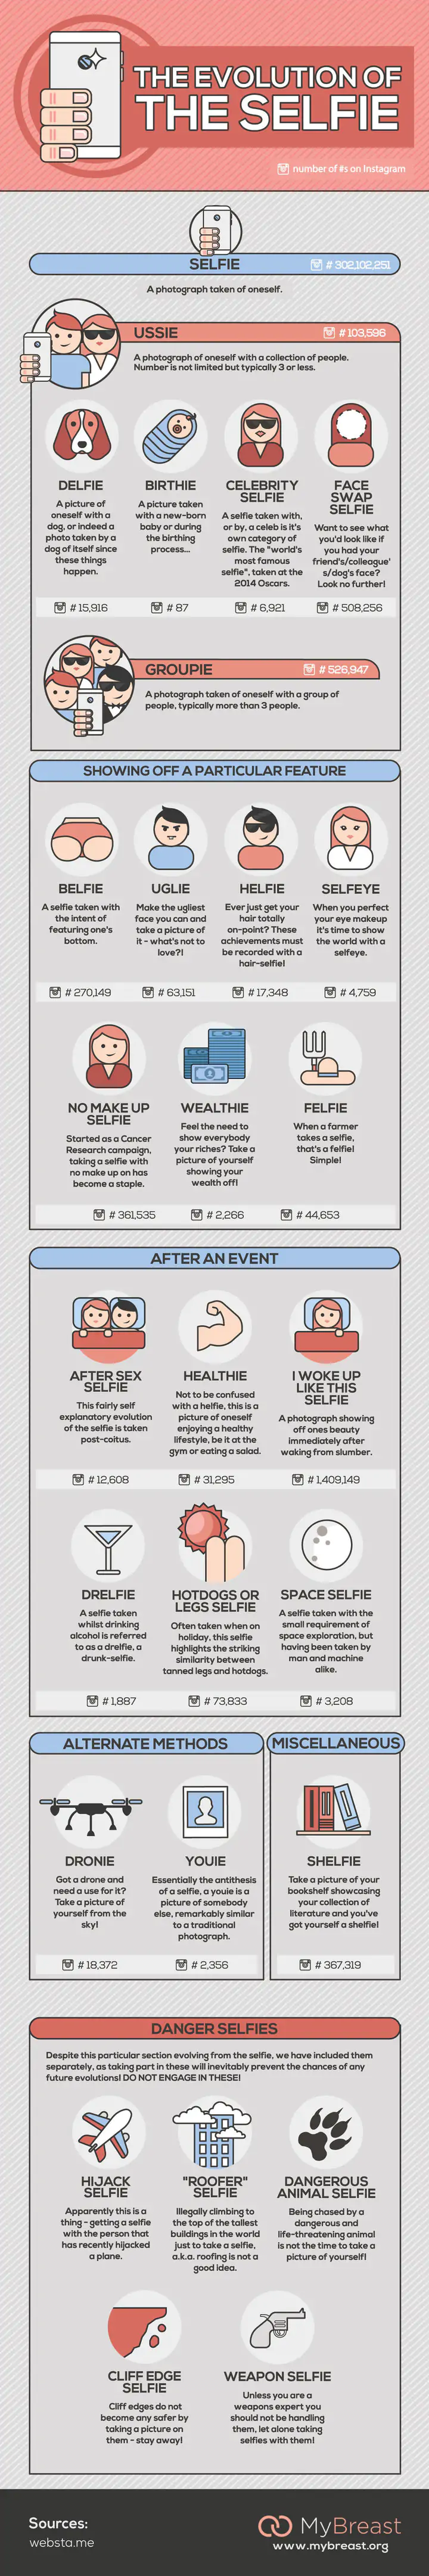 Selfie evolution infographic